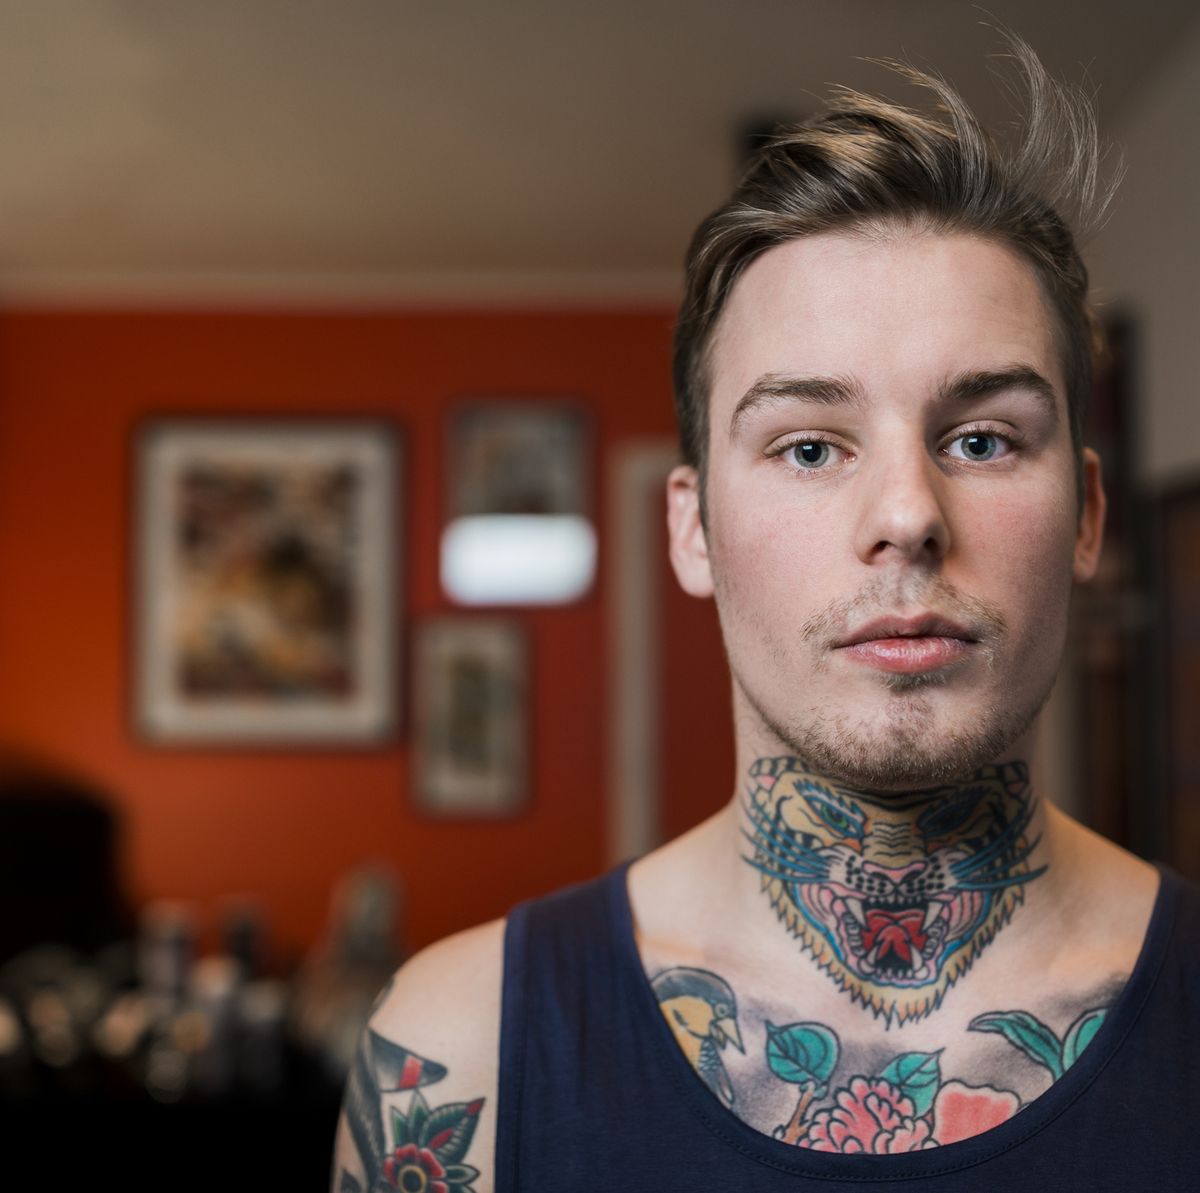 Top 100 Best Sleeve Tattoos For Men: Cool Design Ideas & inspirations, Improb